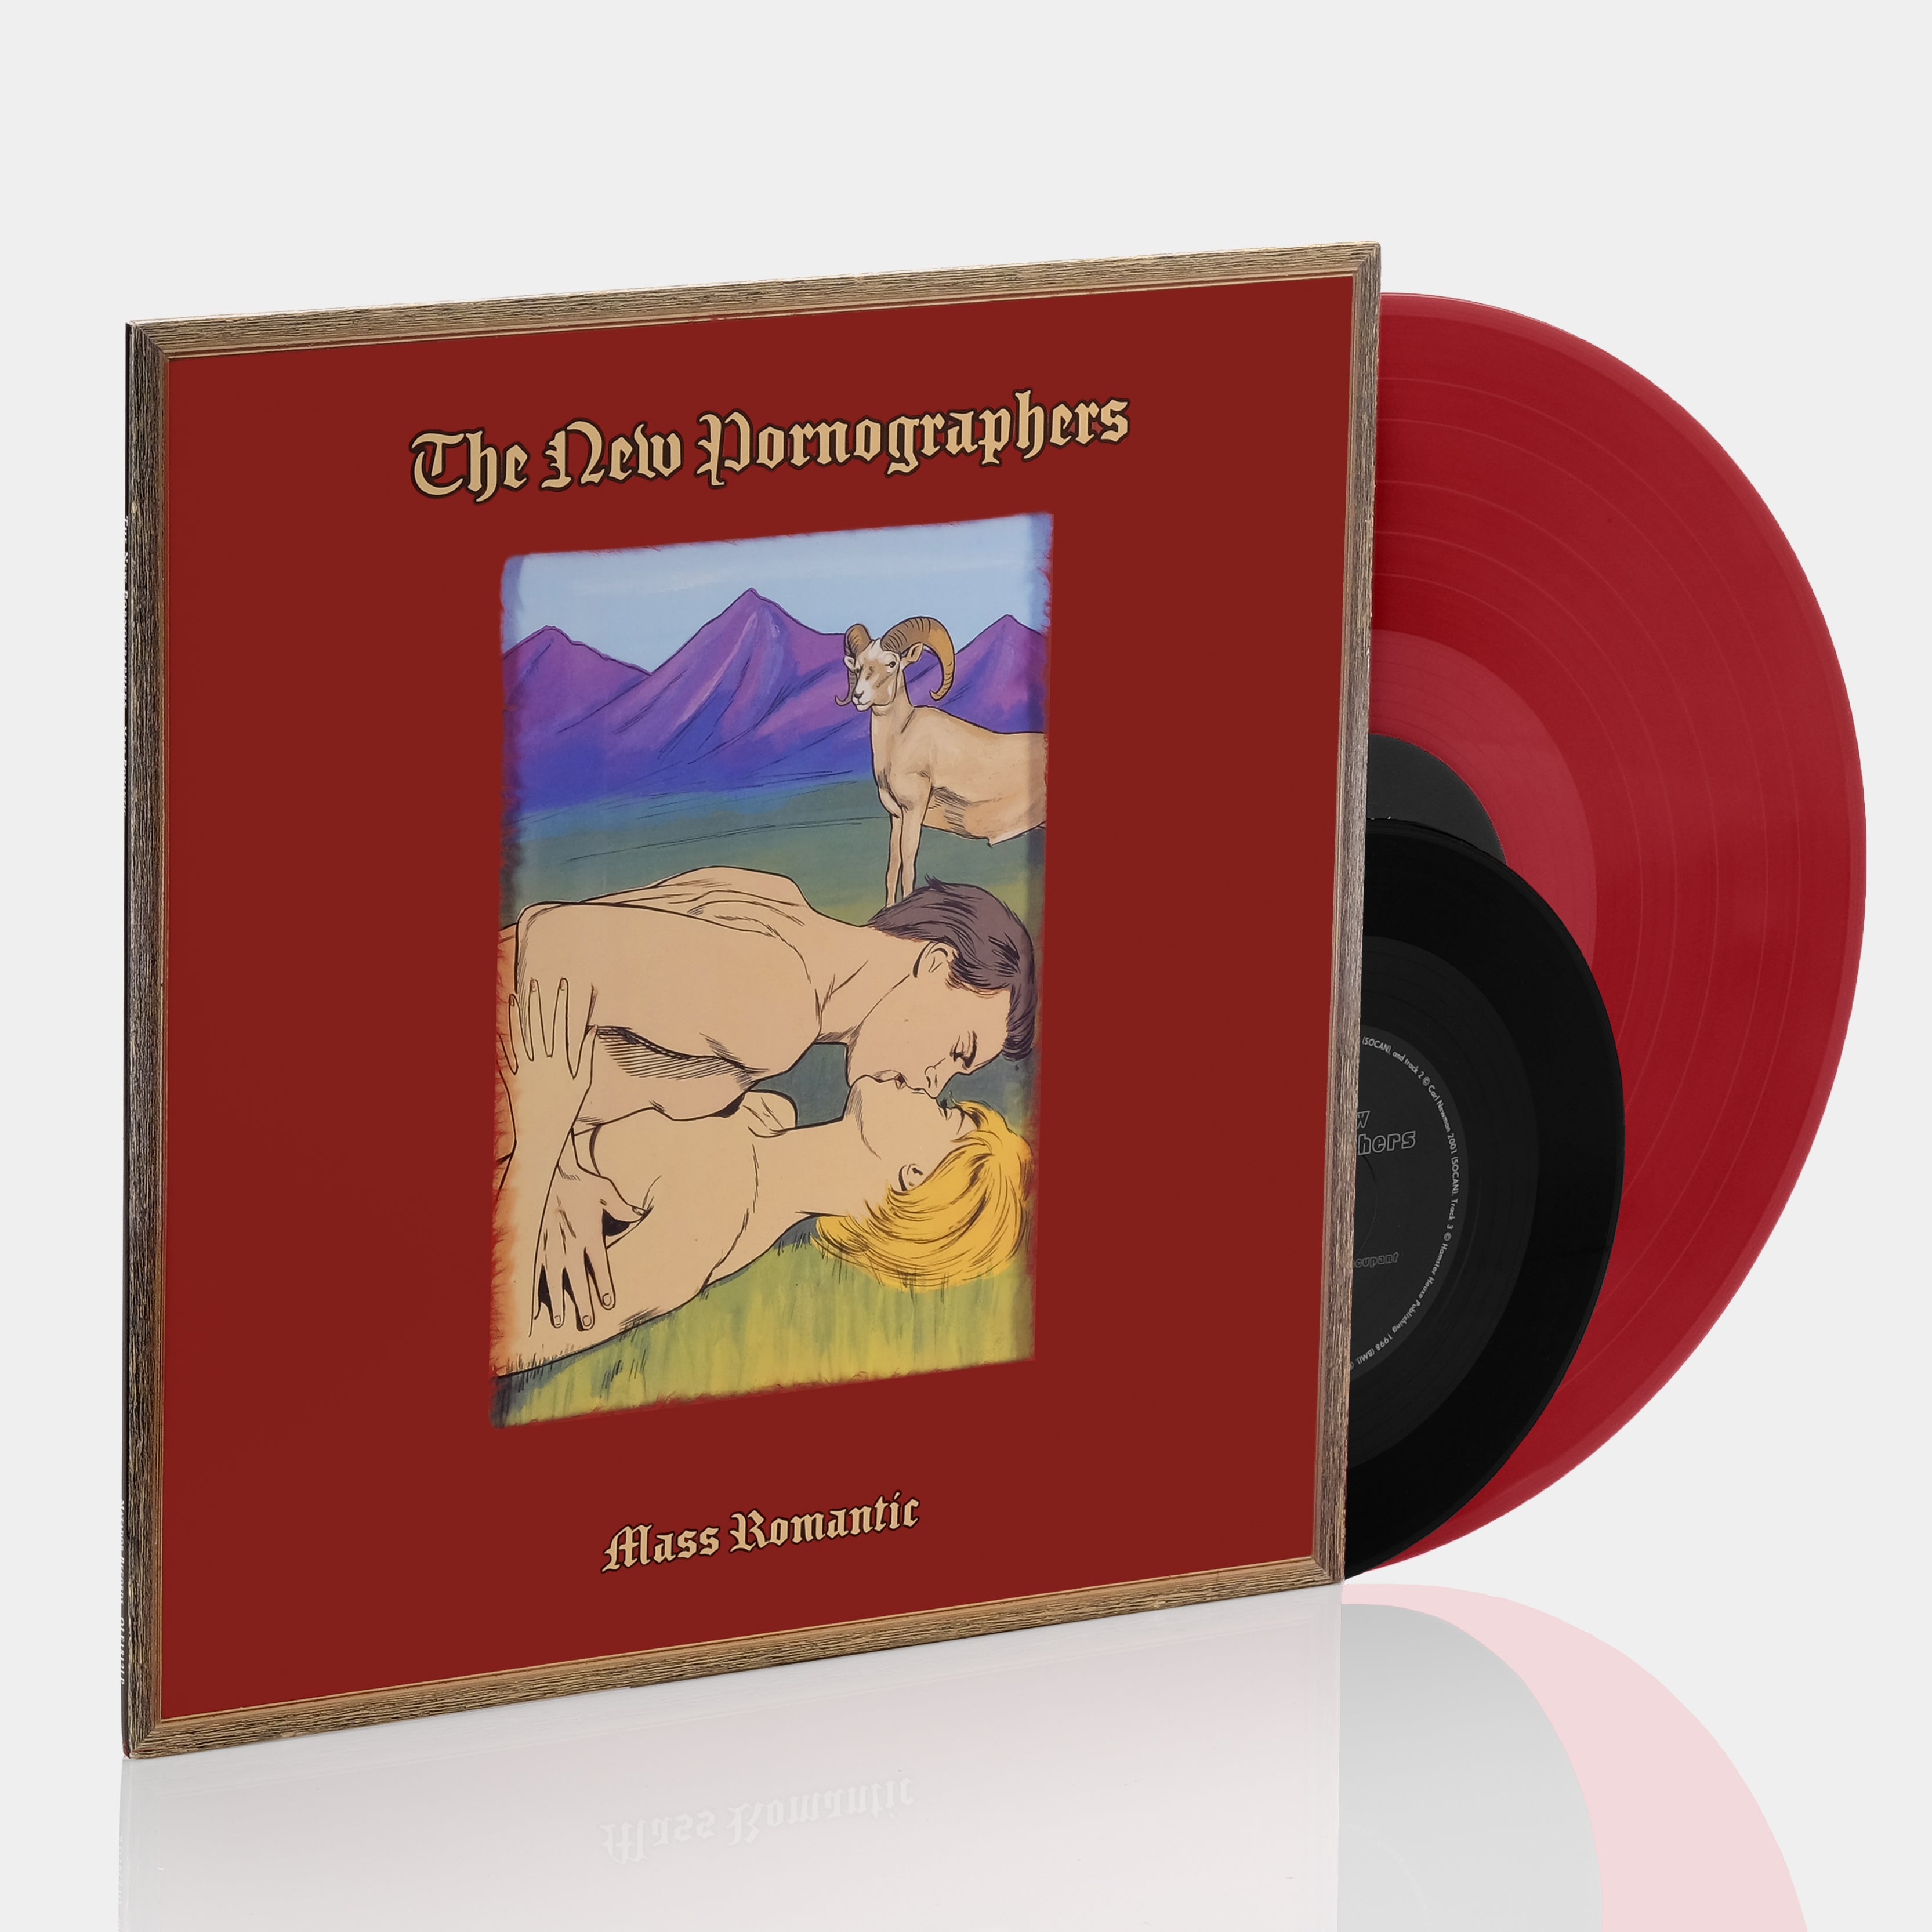 The New Pornographers - Mass Romantic LP Red Vinyl Record + 7" Single